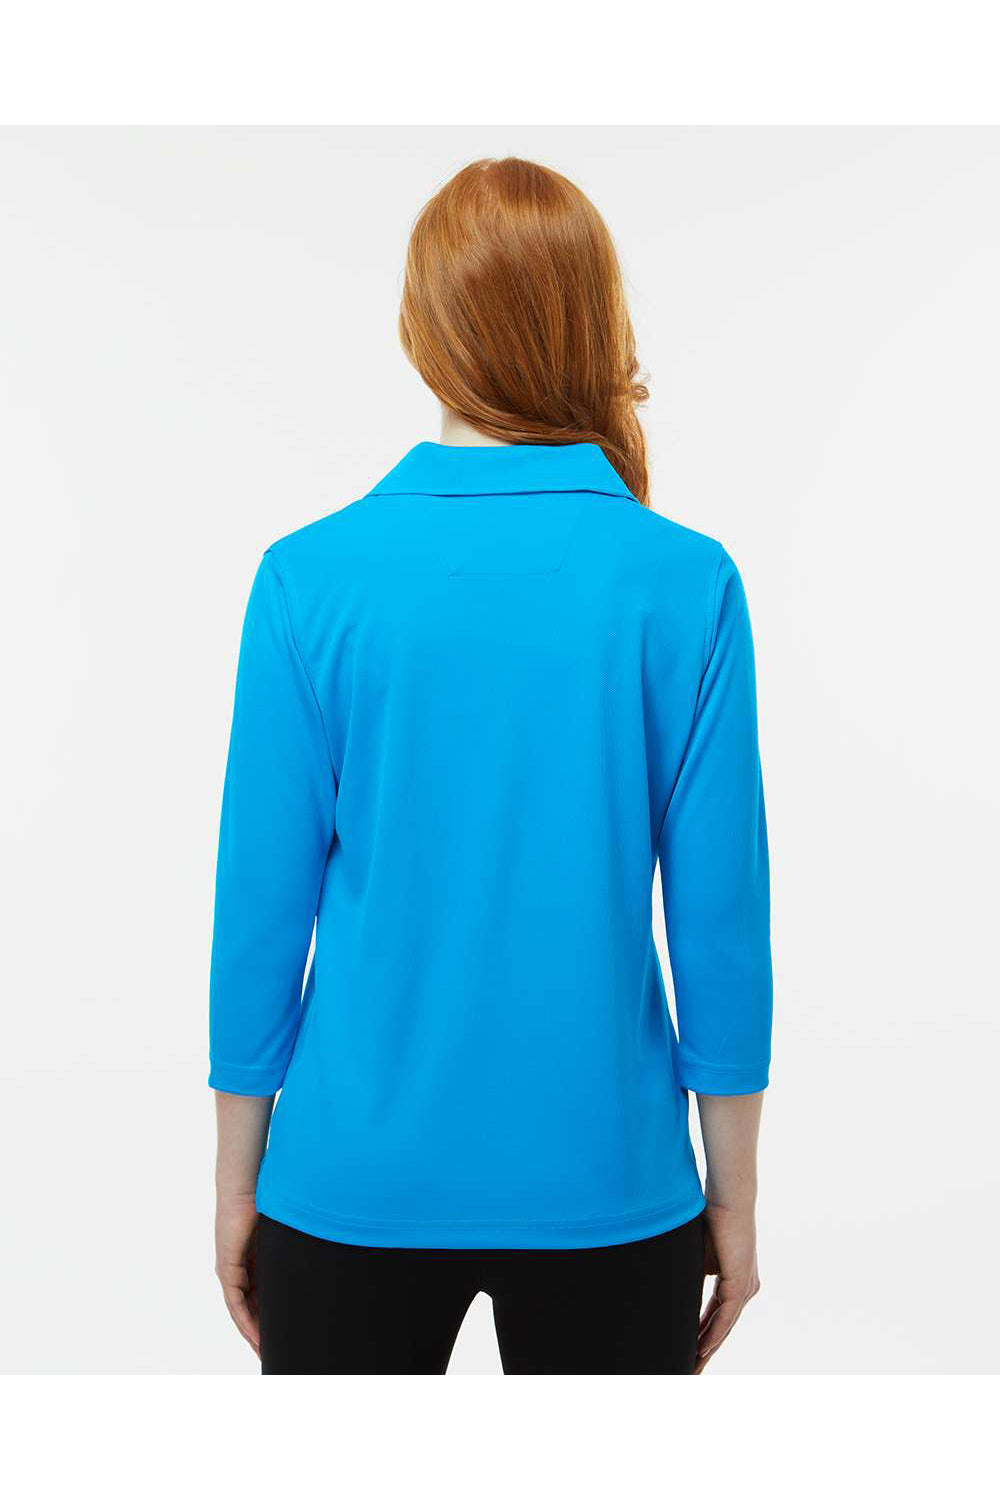 Paragon 120 Womens Lady Palm 3/4 Sleeve Polo Shirt Turquoise Blue Model Back